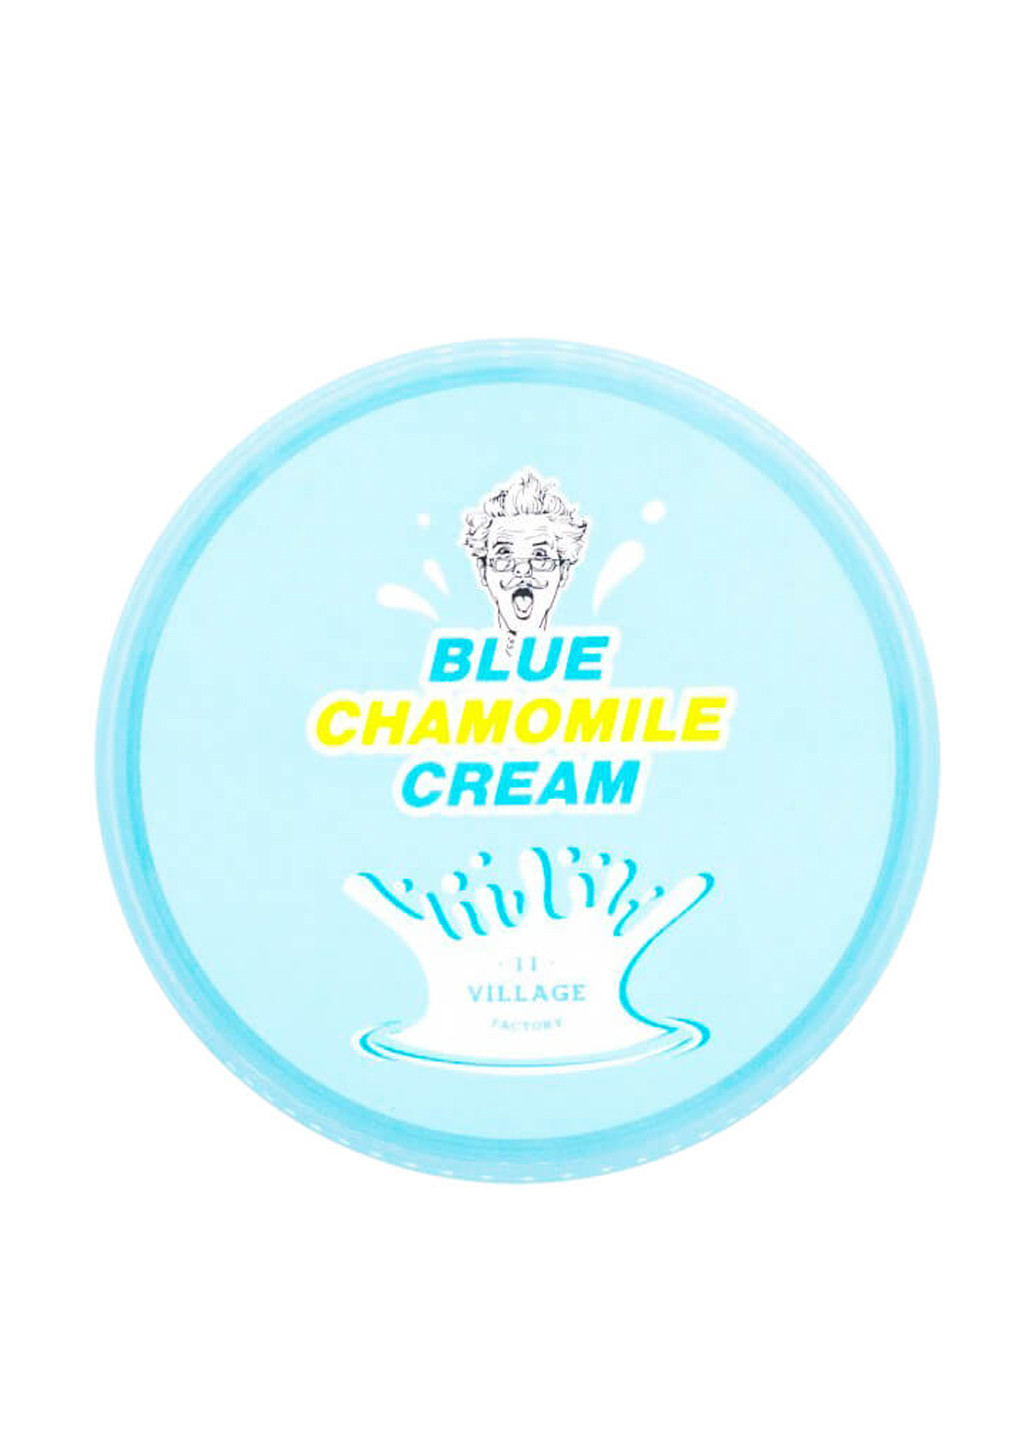 Заспокійливий крем для обличчя Blue Chamomile Cream, 300 мл 11 Village Factory